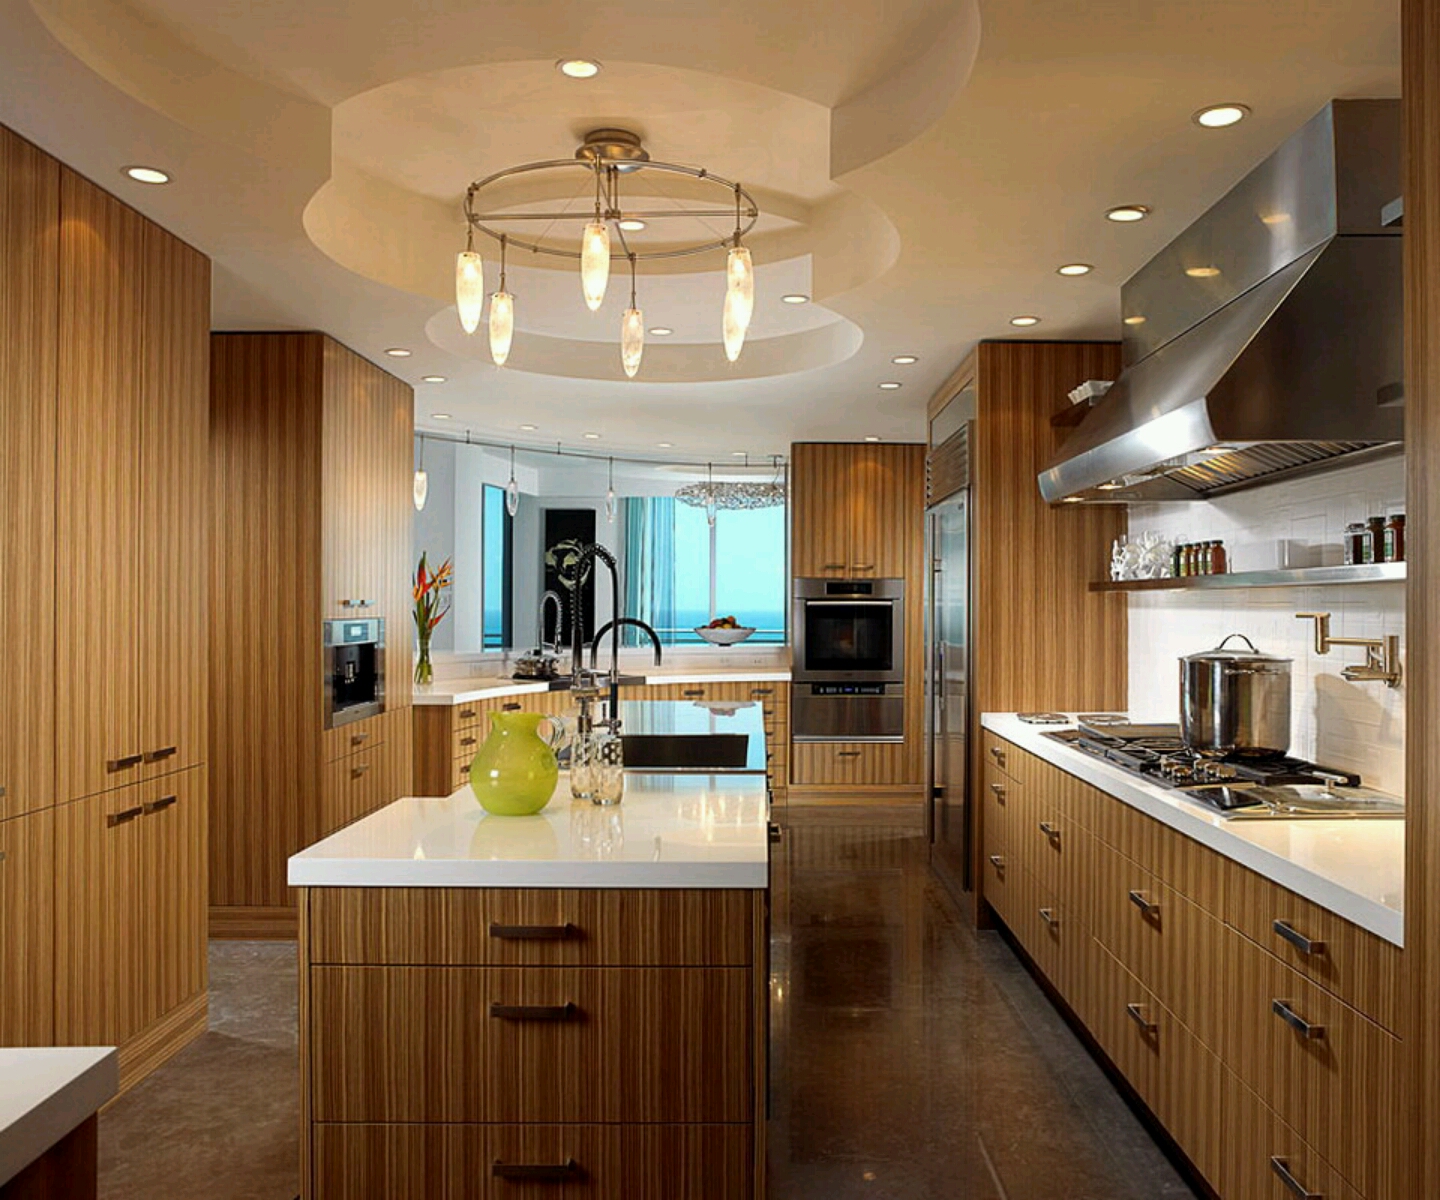 New Kitchen Furniture Design Ideas with Simple Decor